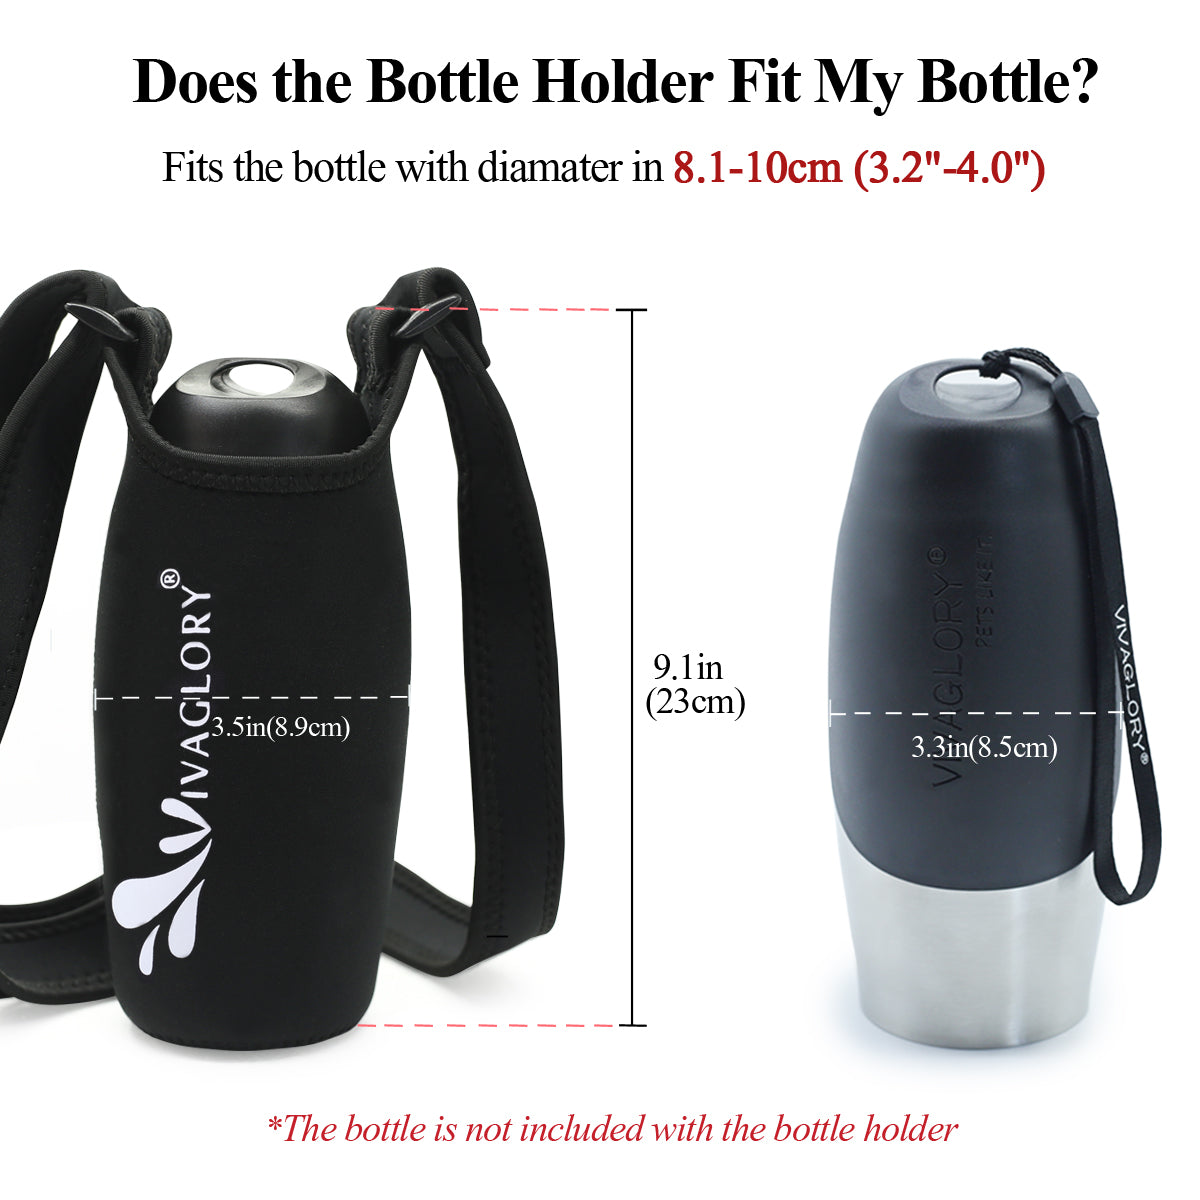 Insulated Neoprene Glass Water Bottle Holder with Adjustable Shoulder Strap  for Walking, Silicone BLACK Brush (Black Carrier)